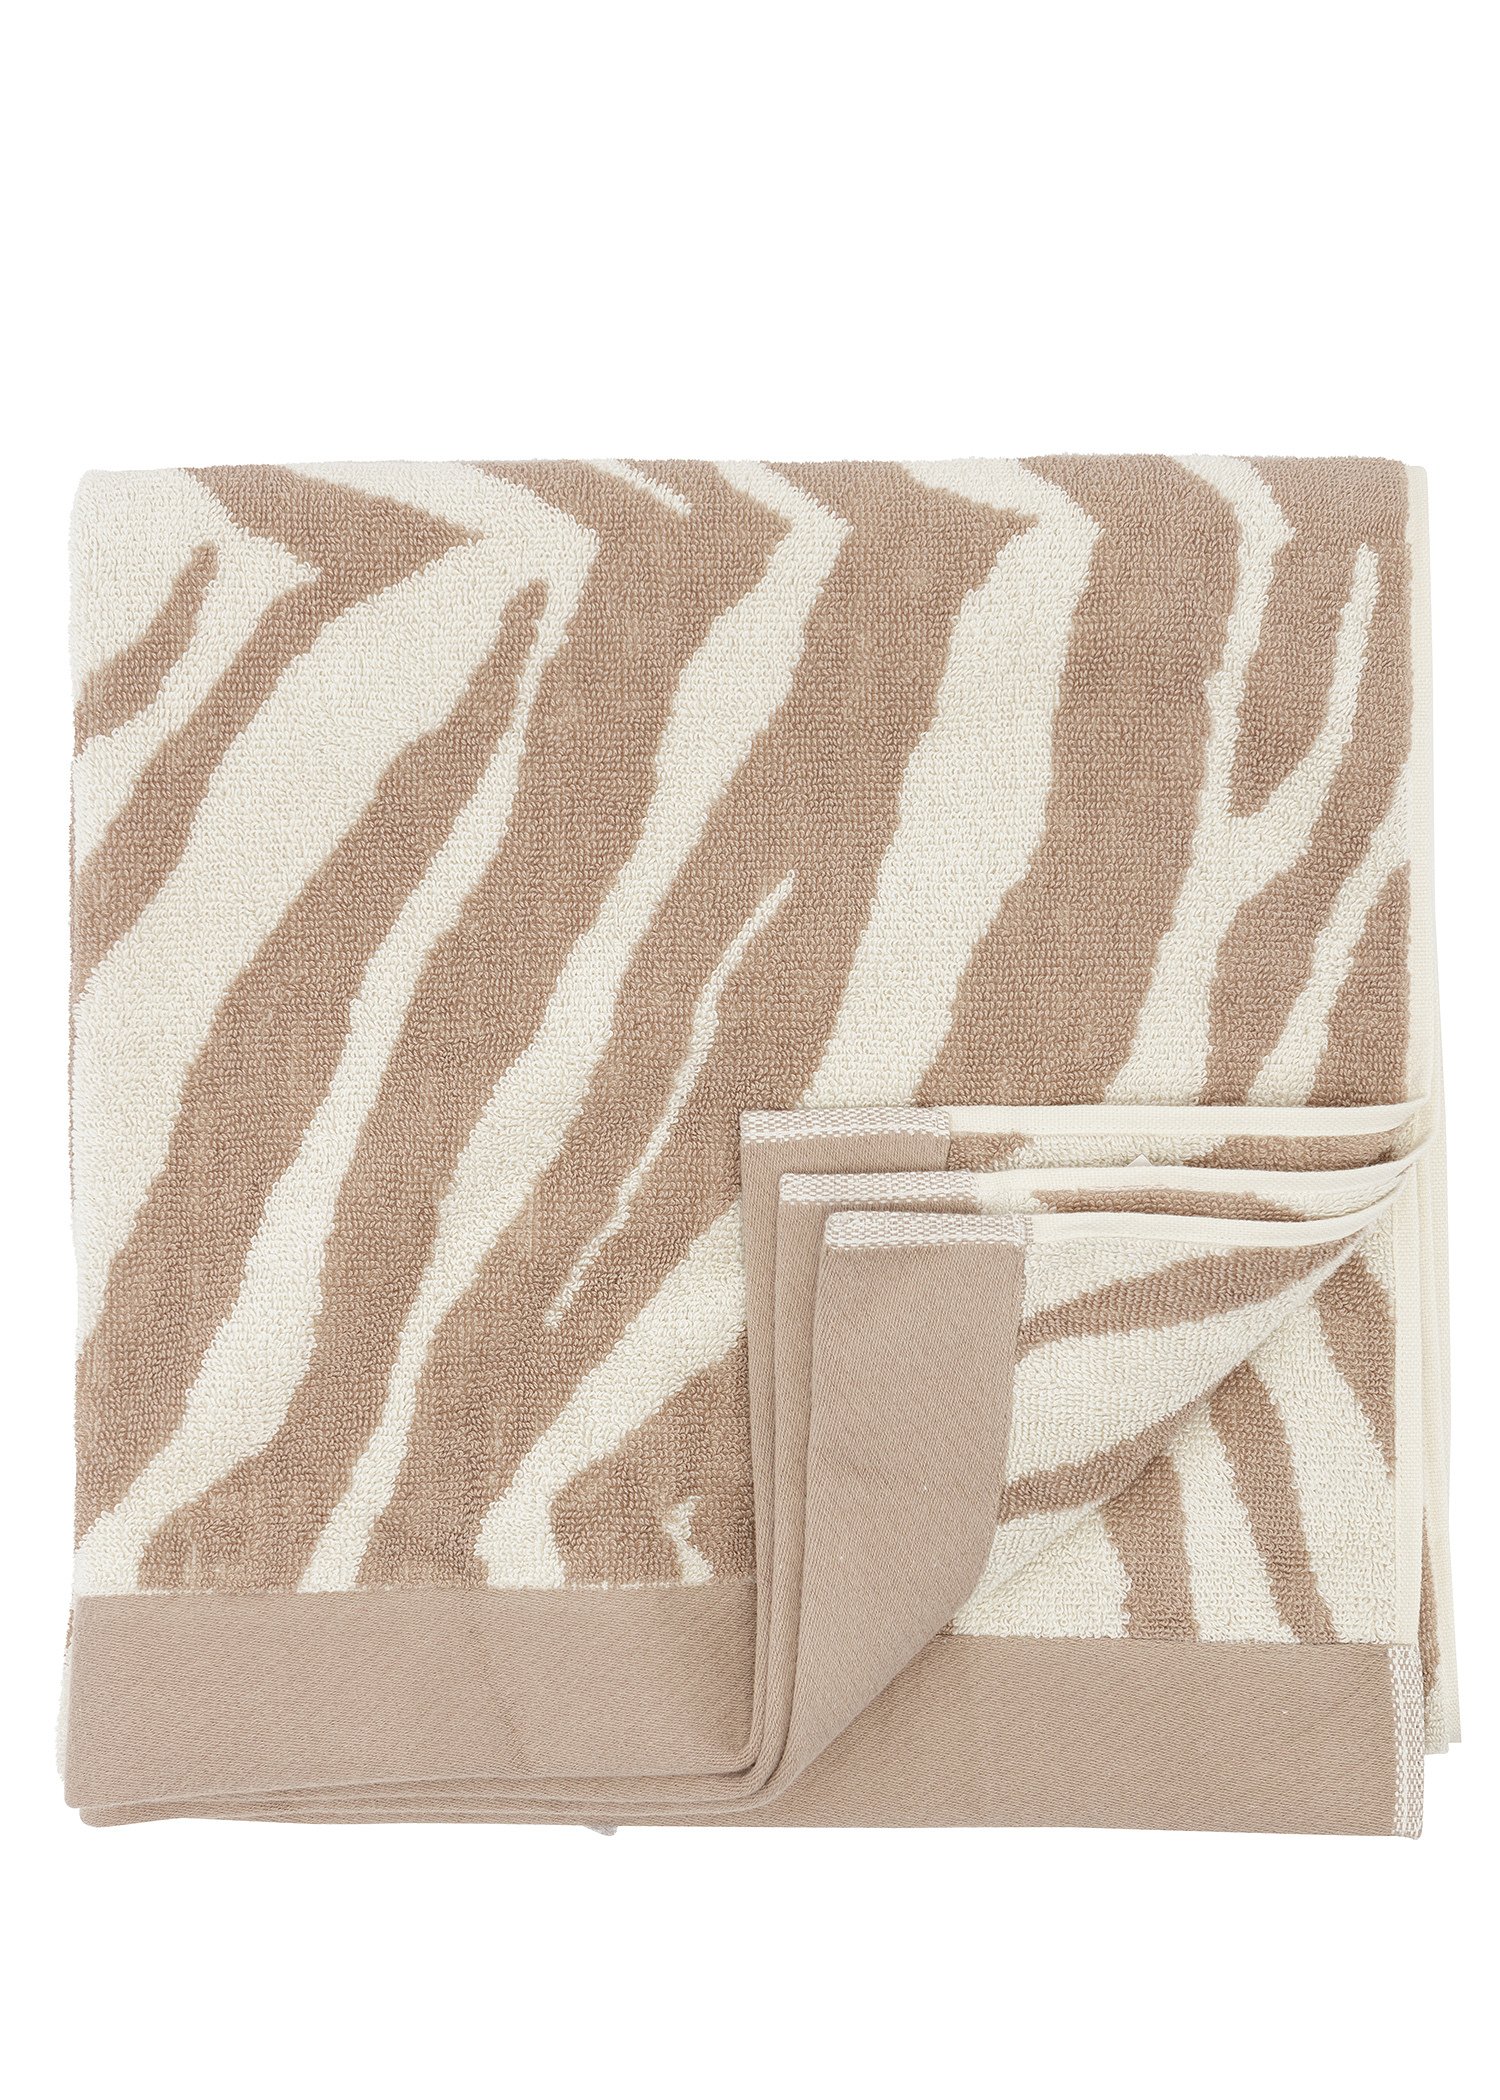 Zebra patterned bath towel